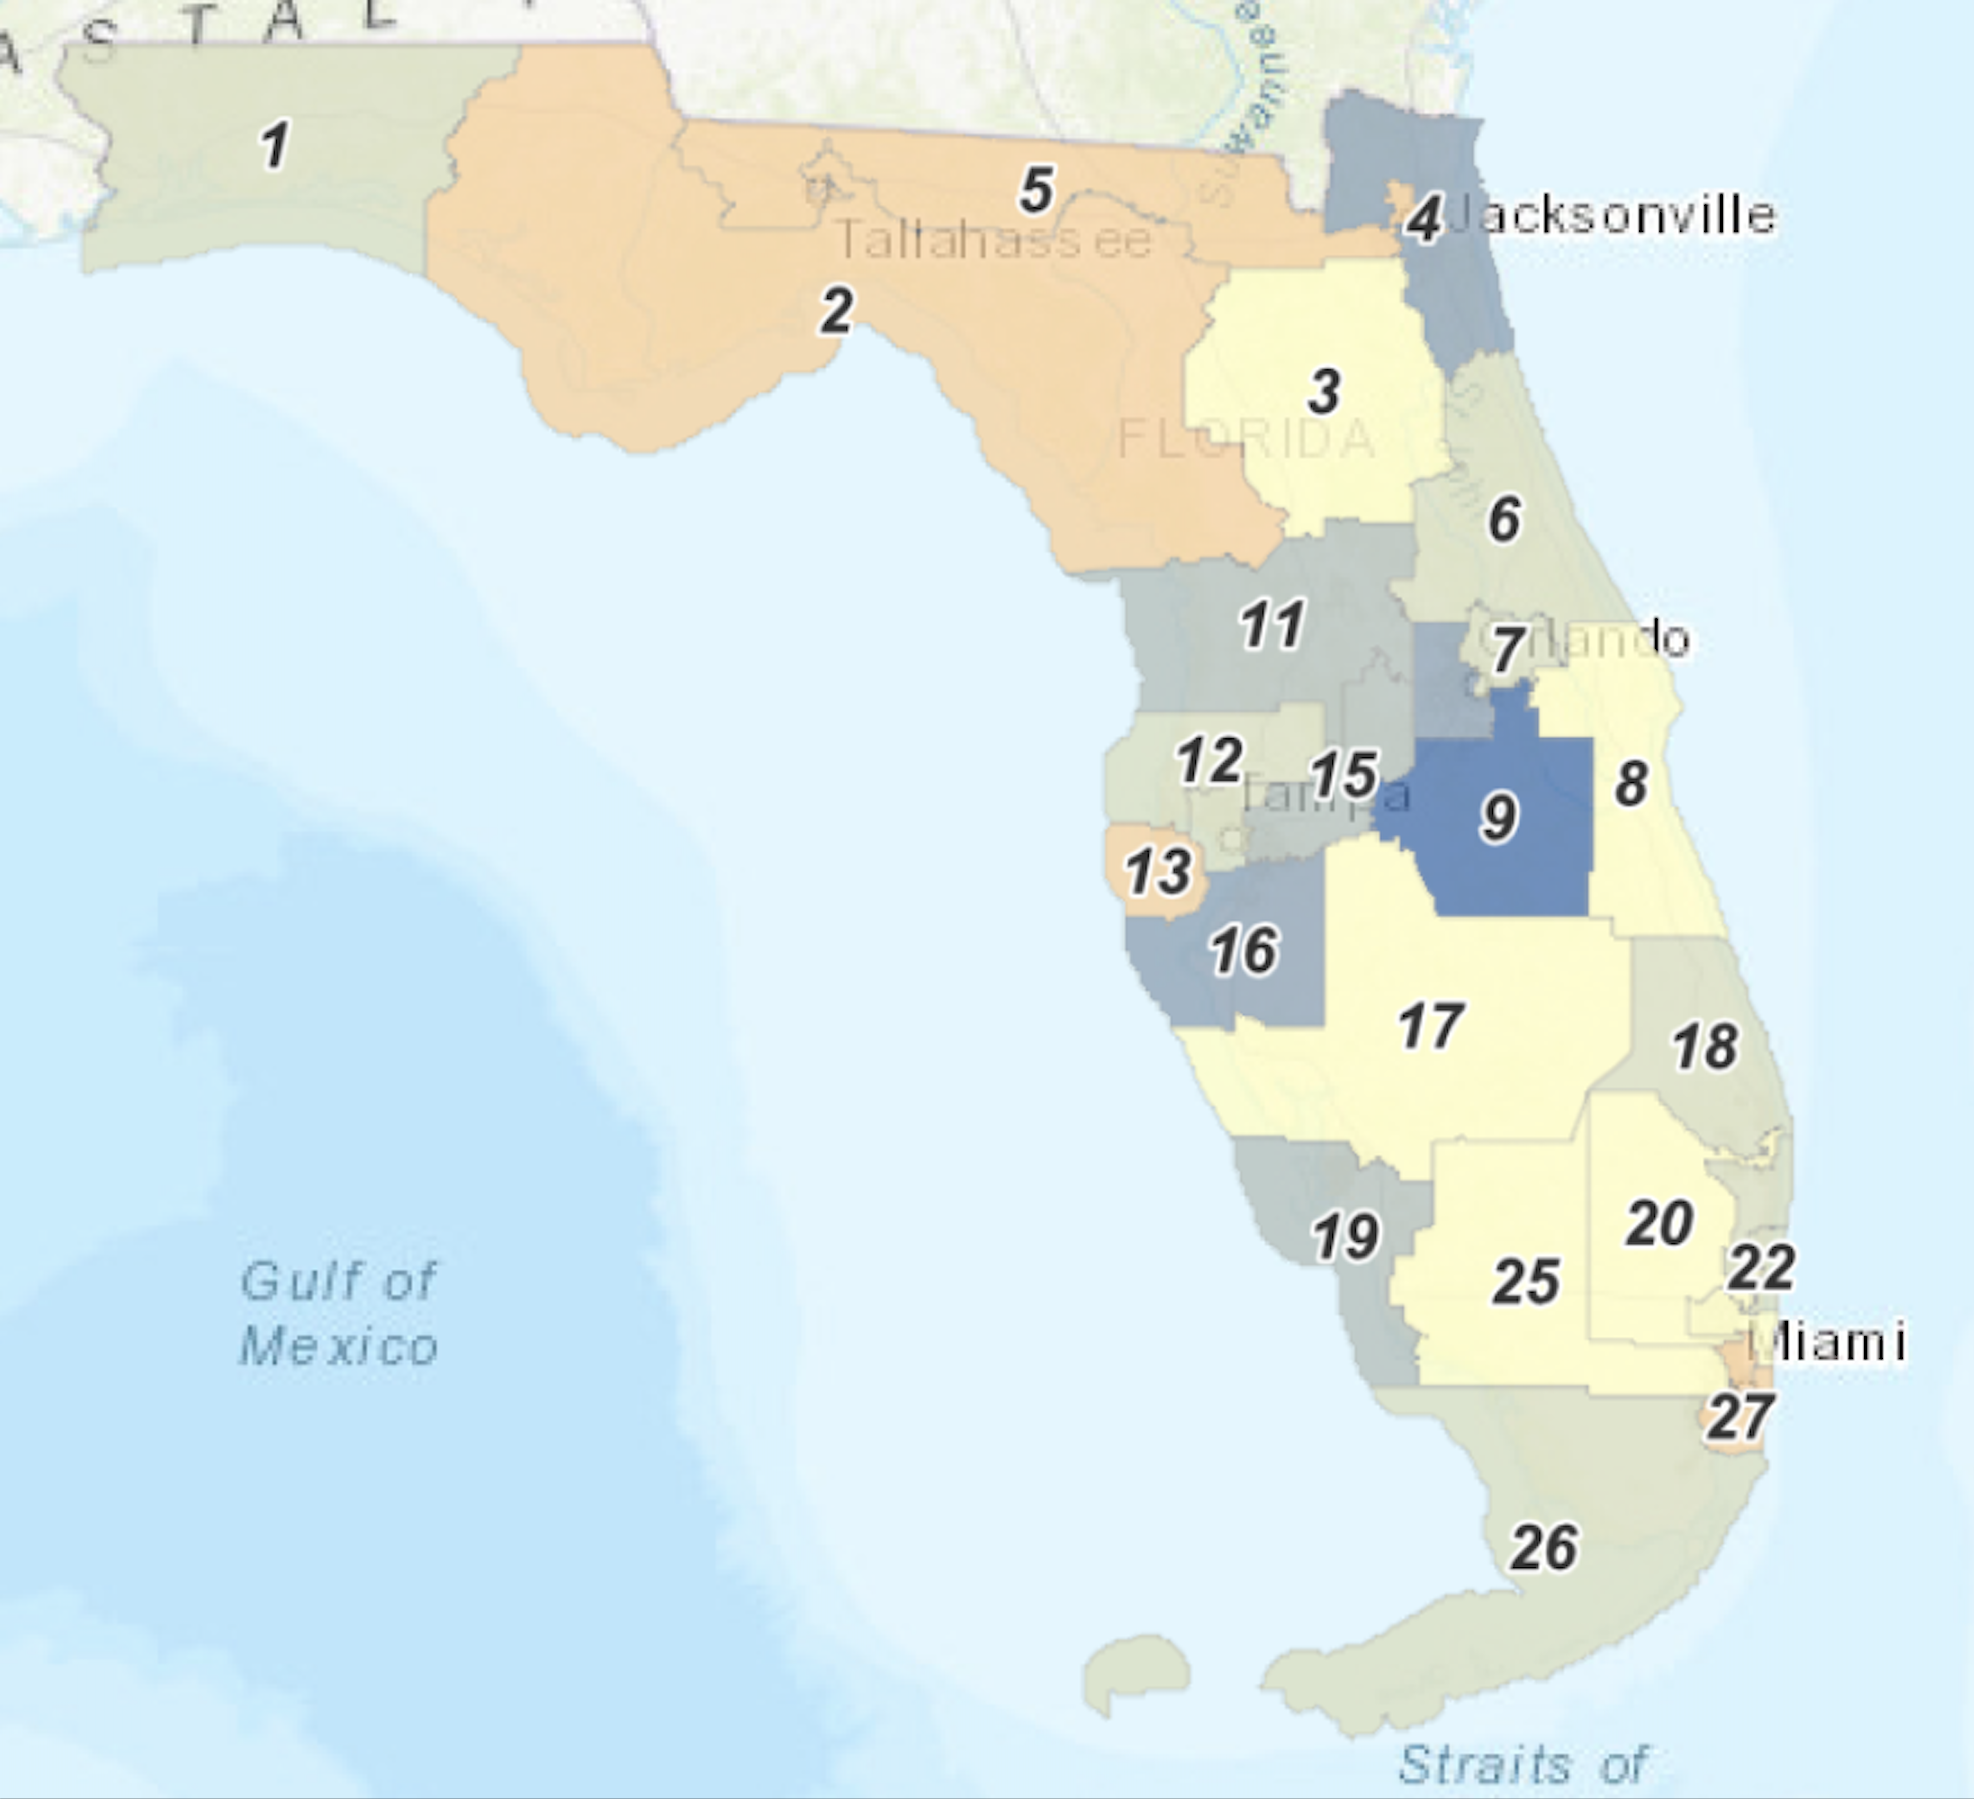 Florida legislature to vote on DeSantis’ redistricting map